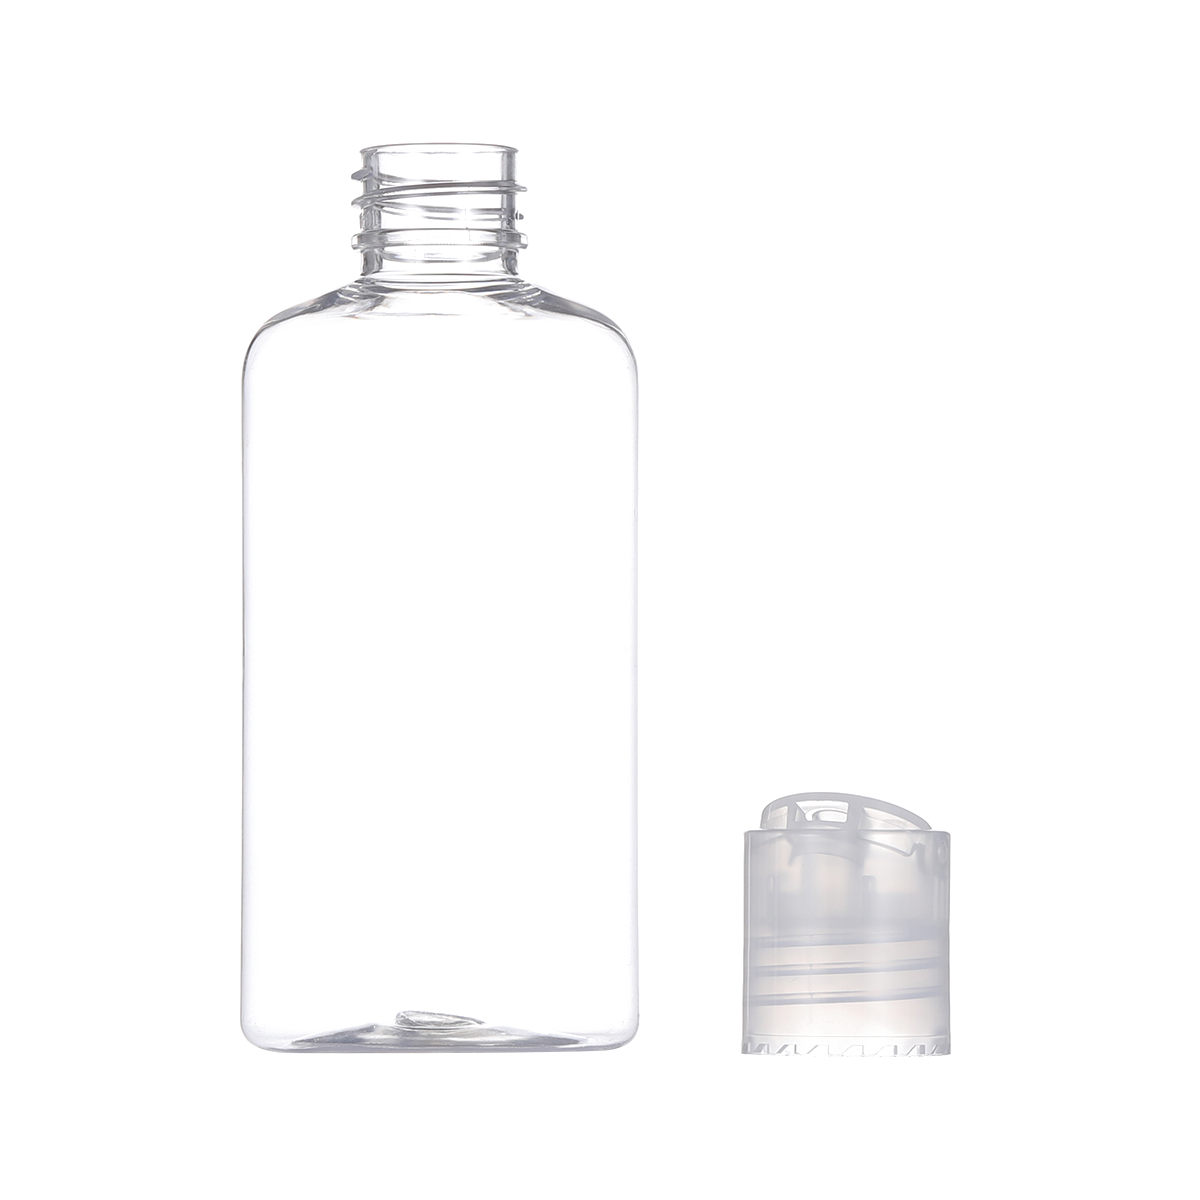 Small spray bottle alcohol disinfection spray bottle